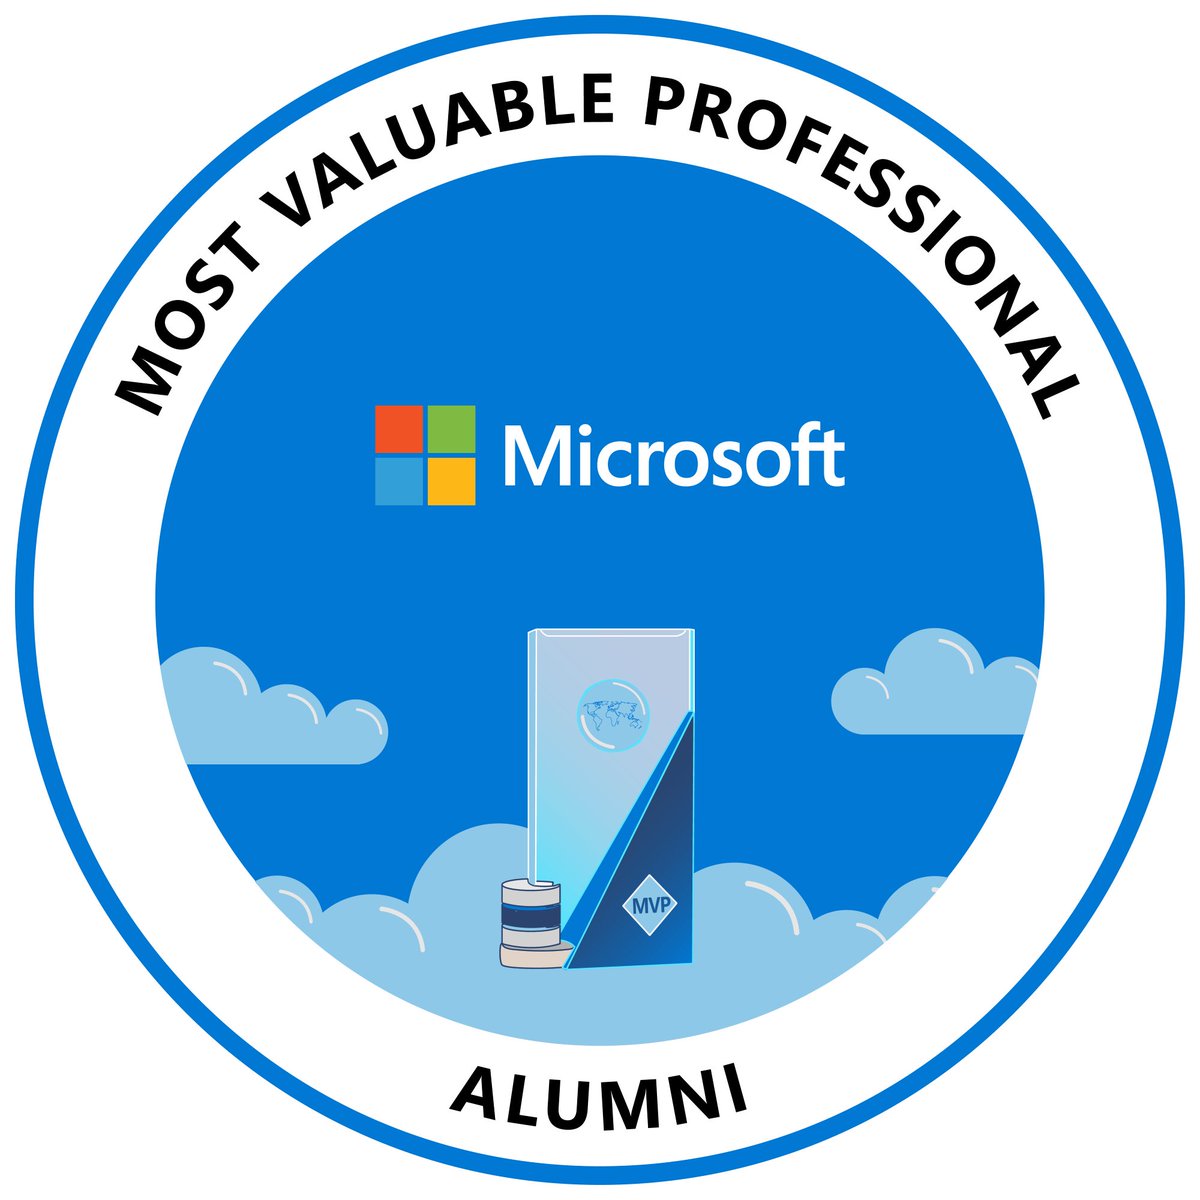 Happy to receive this beautiful #badge from @Microsoft. 

#mvpbuzz #mostvaluableprofessional #award #community #microsoft #alumni #communityleadership #technicalexpert #mvpalumni 

credly.com/badges/48ac587…